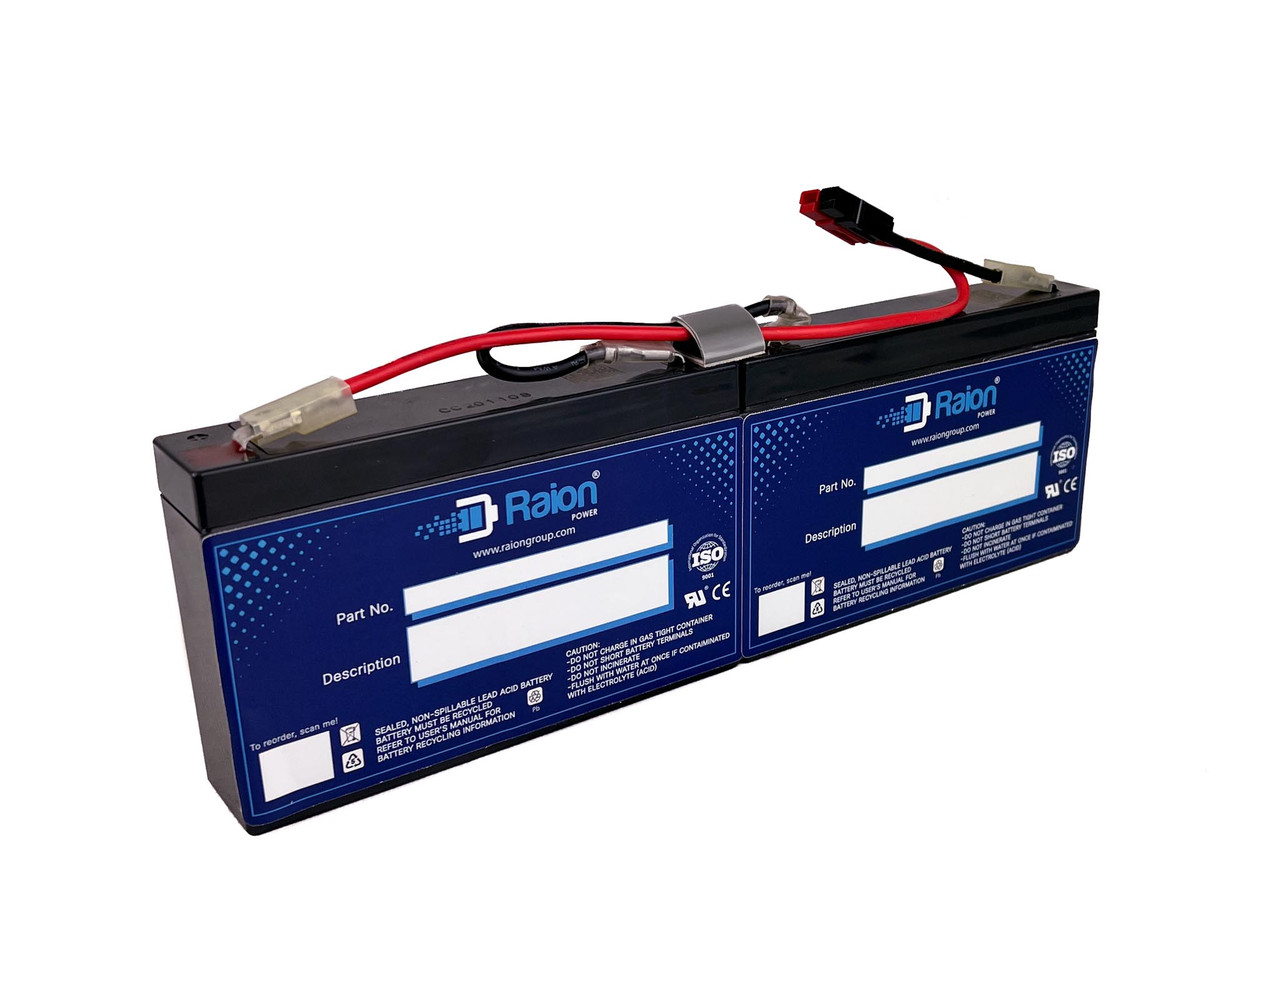 Raion Power RG-RBC18 Replacement Battery Cartridge for APC Bay 450 RM 1U BAY450